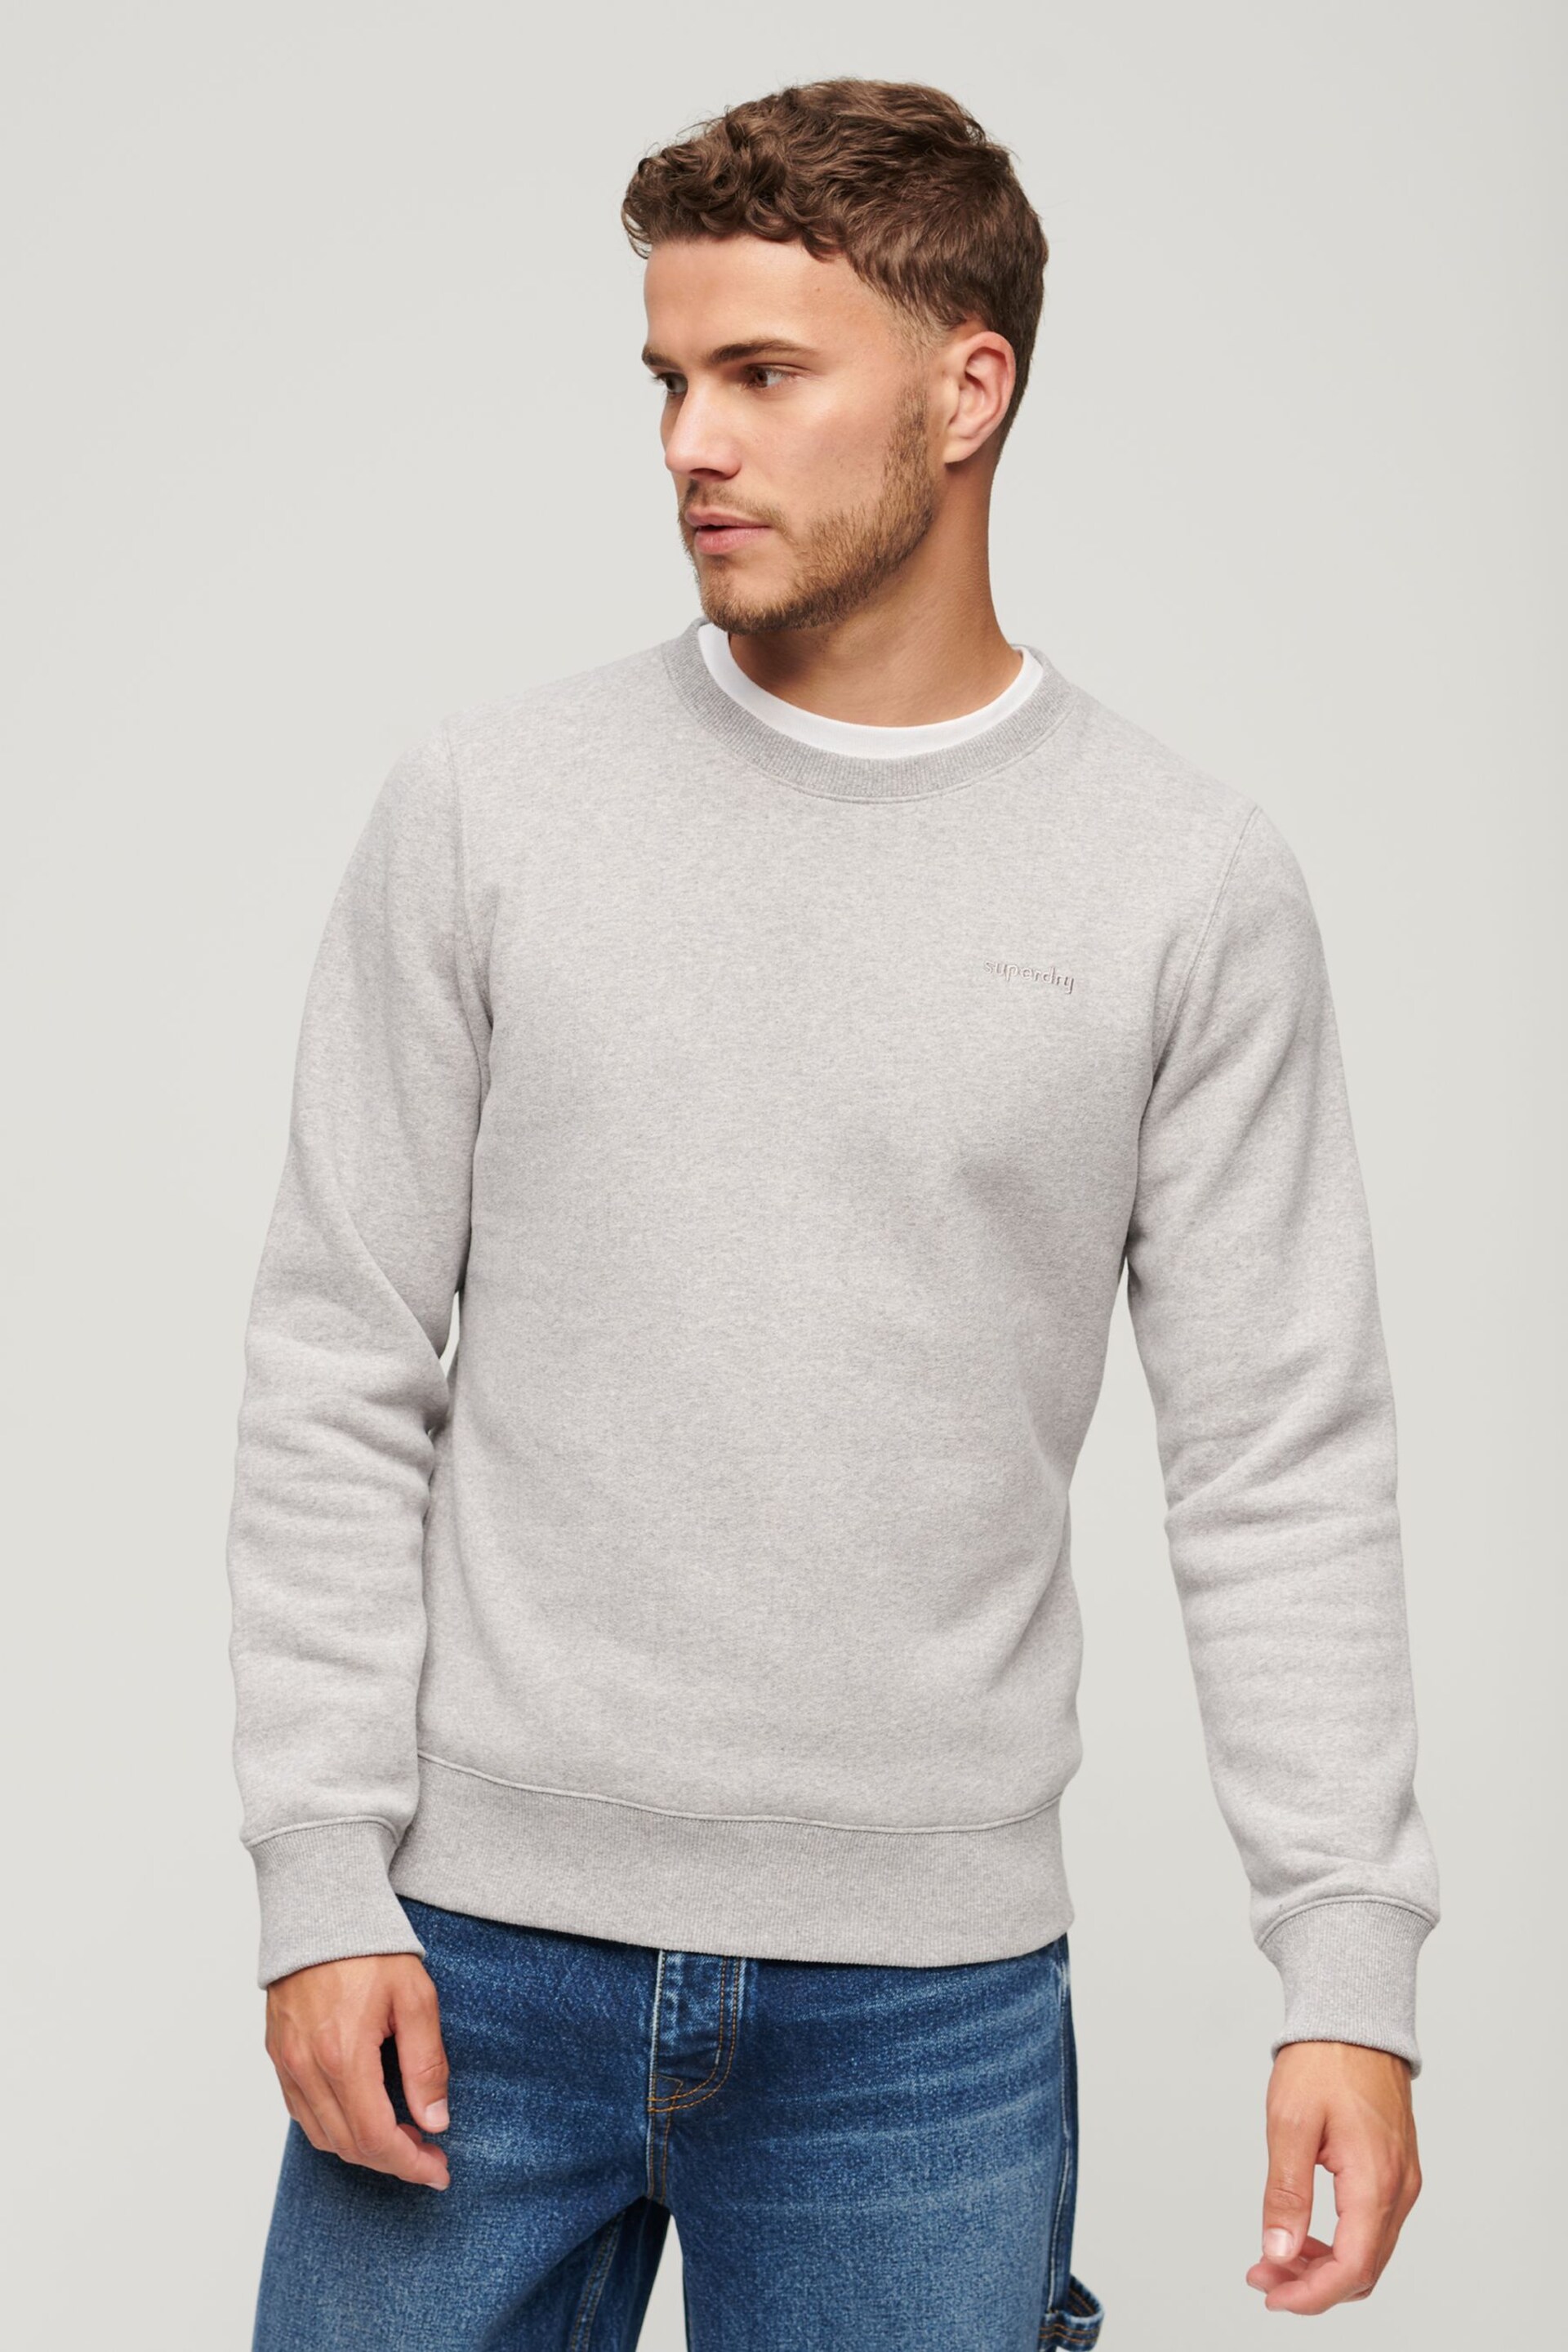 Superdry Grey Vintage Washed Sweatshirt - Image 1 of 6